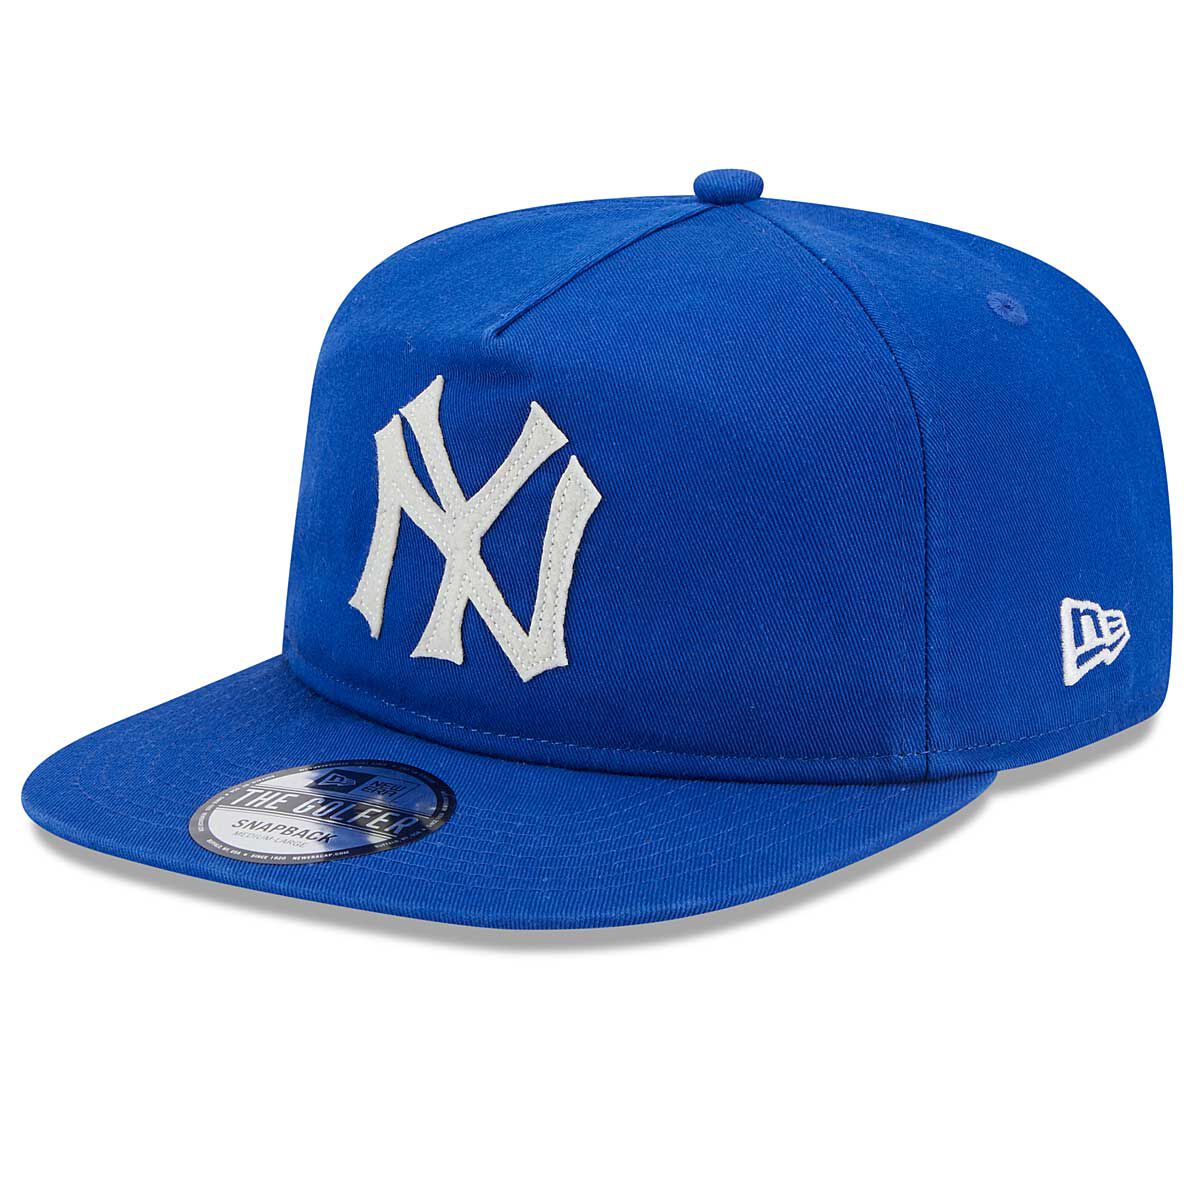 MLB NEW YORK YANKEES WORLD SERIES PATCH GOLFER SNAPBACK CAP